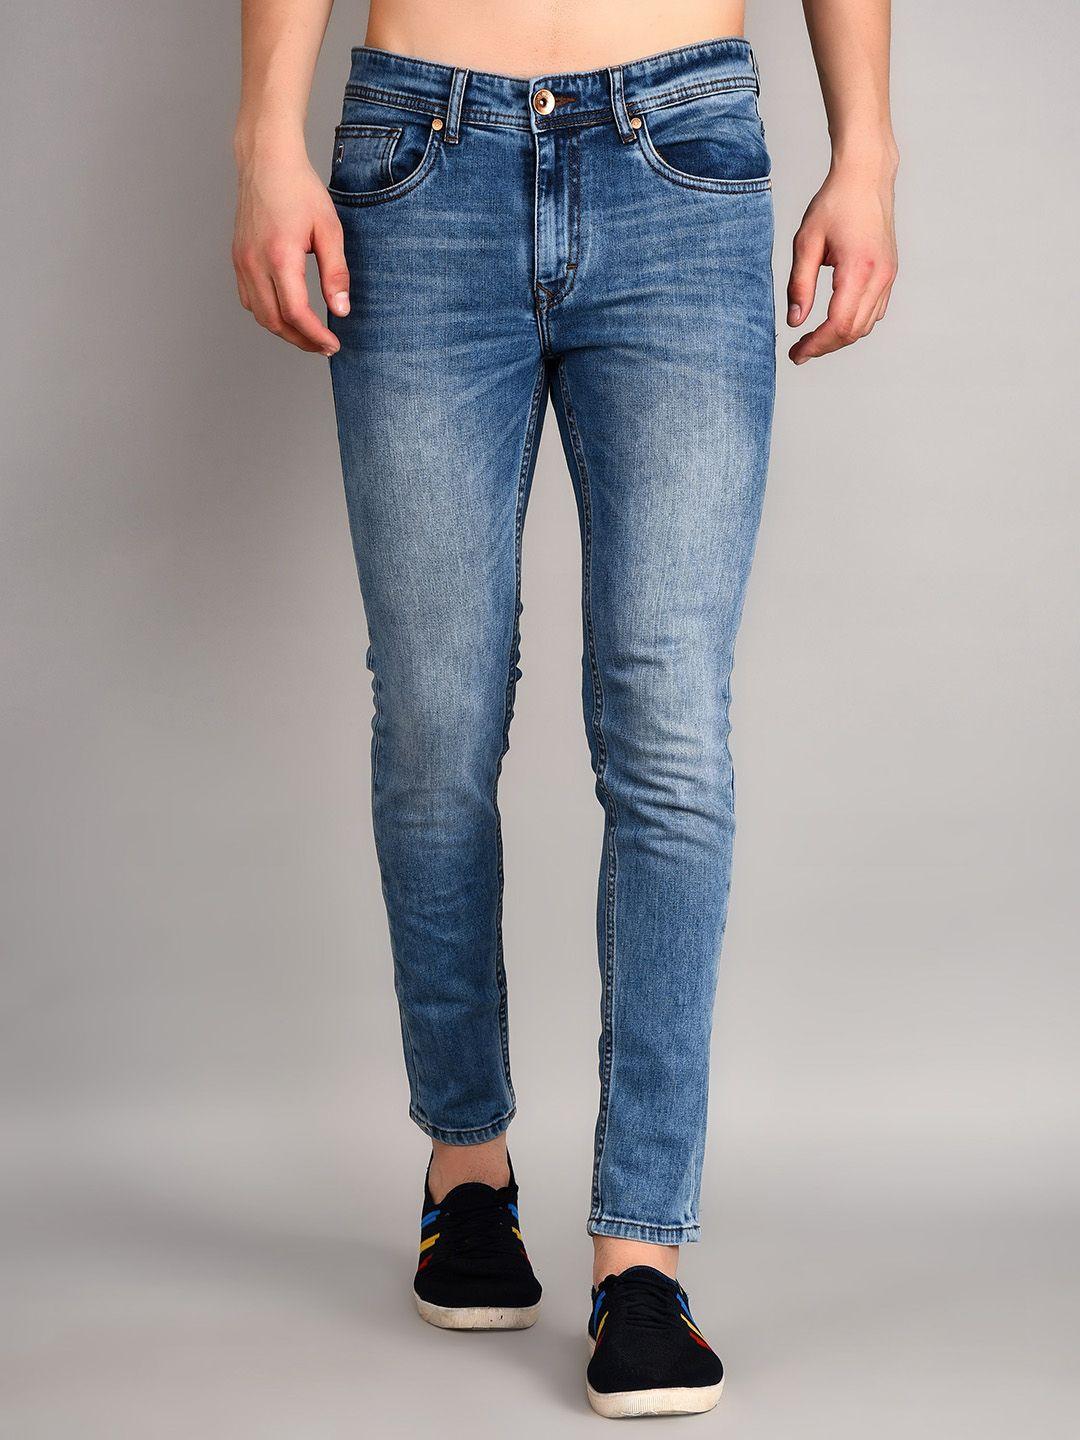 tim-paris-men-comfort-skinny-fit-mid-rise-light-fade-stretchable-cotton-jeans